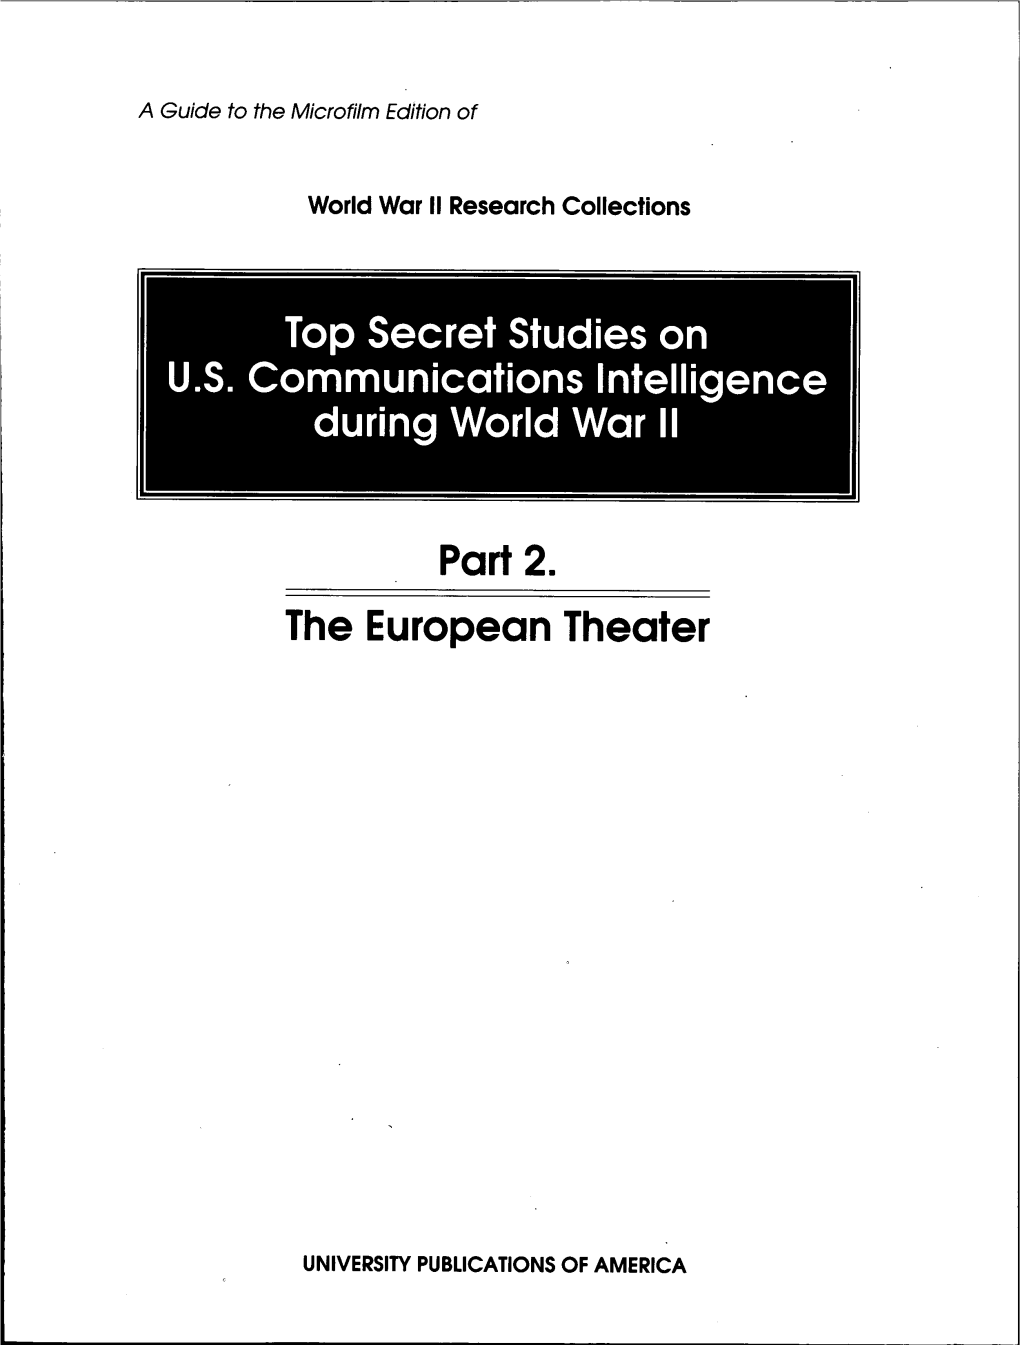 Top Secret Studies on U.S. Communications Intelligence During World War II